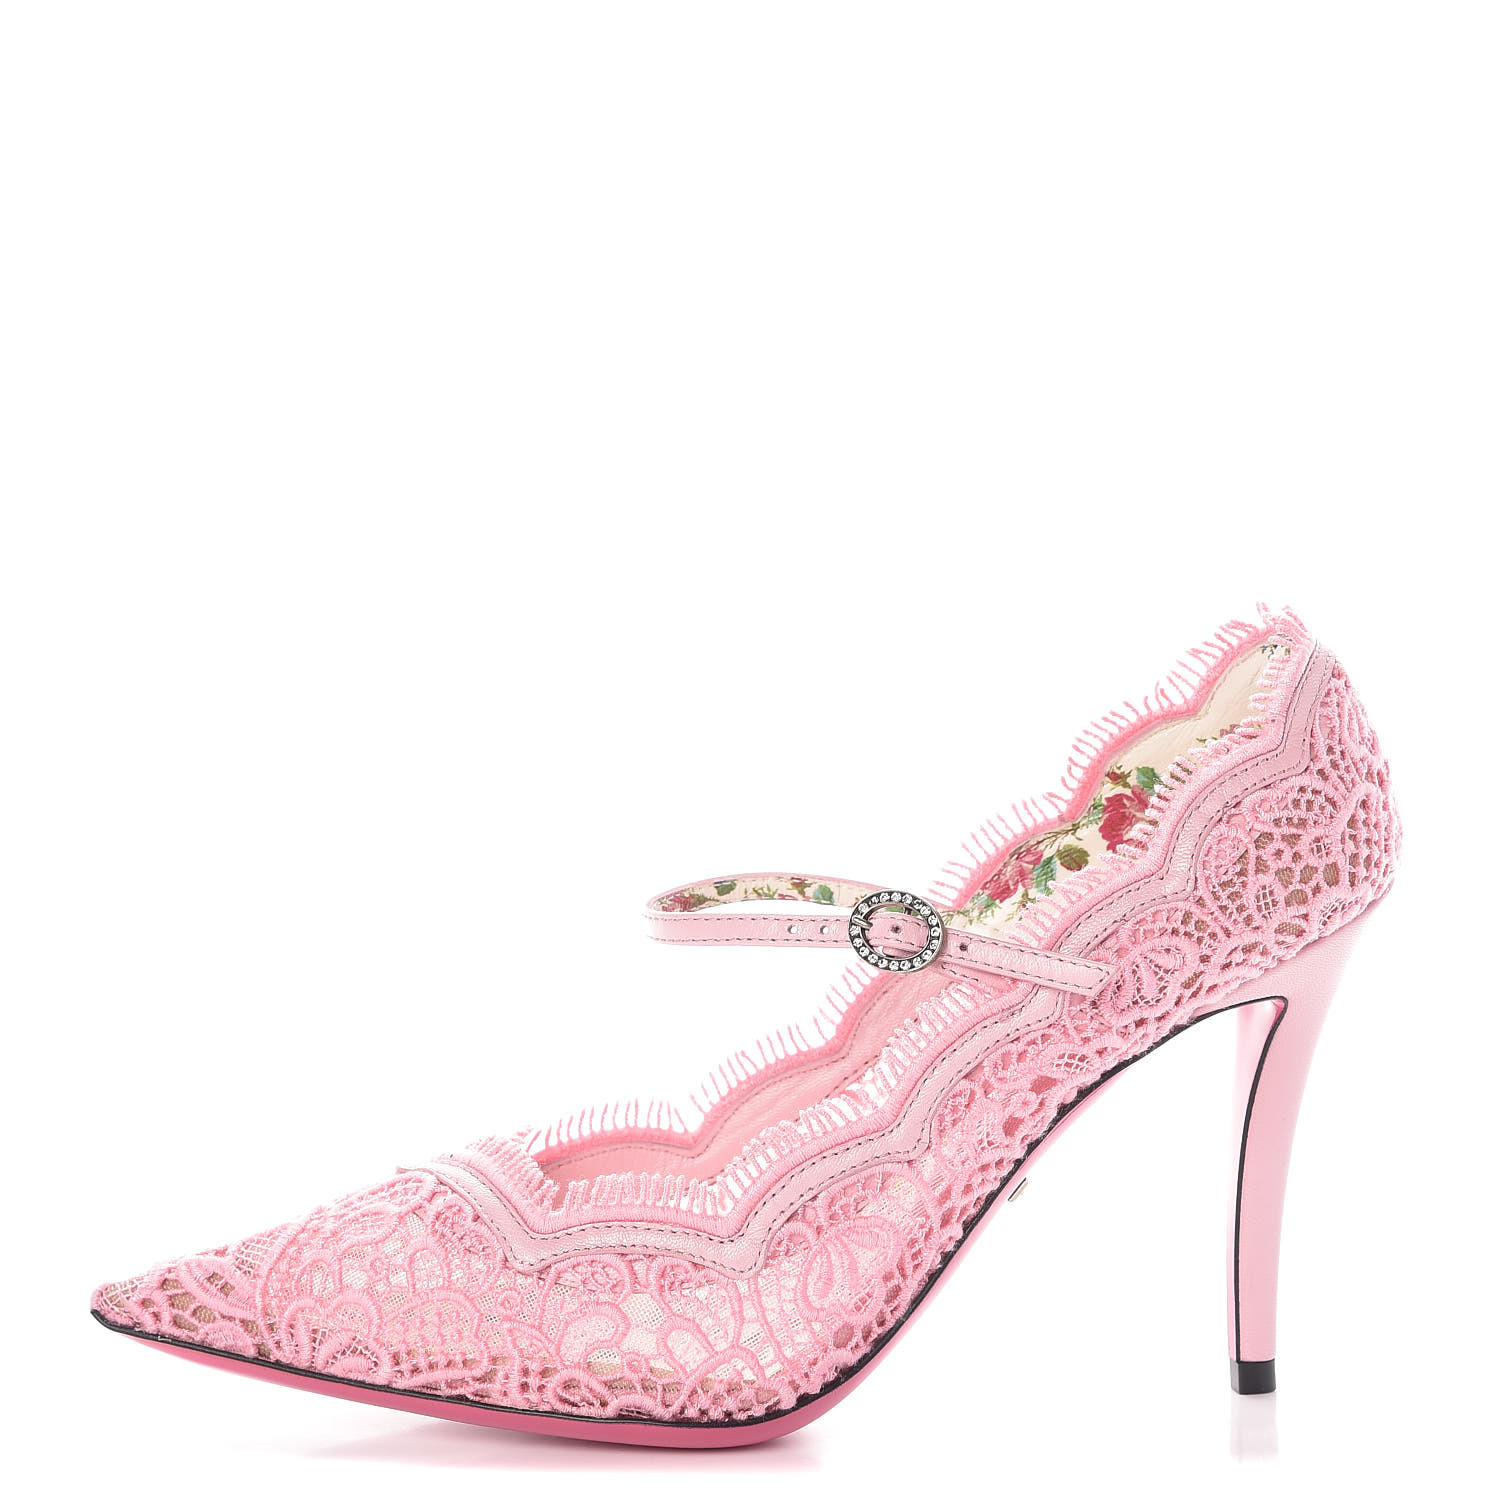 light pink 2 inch heels